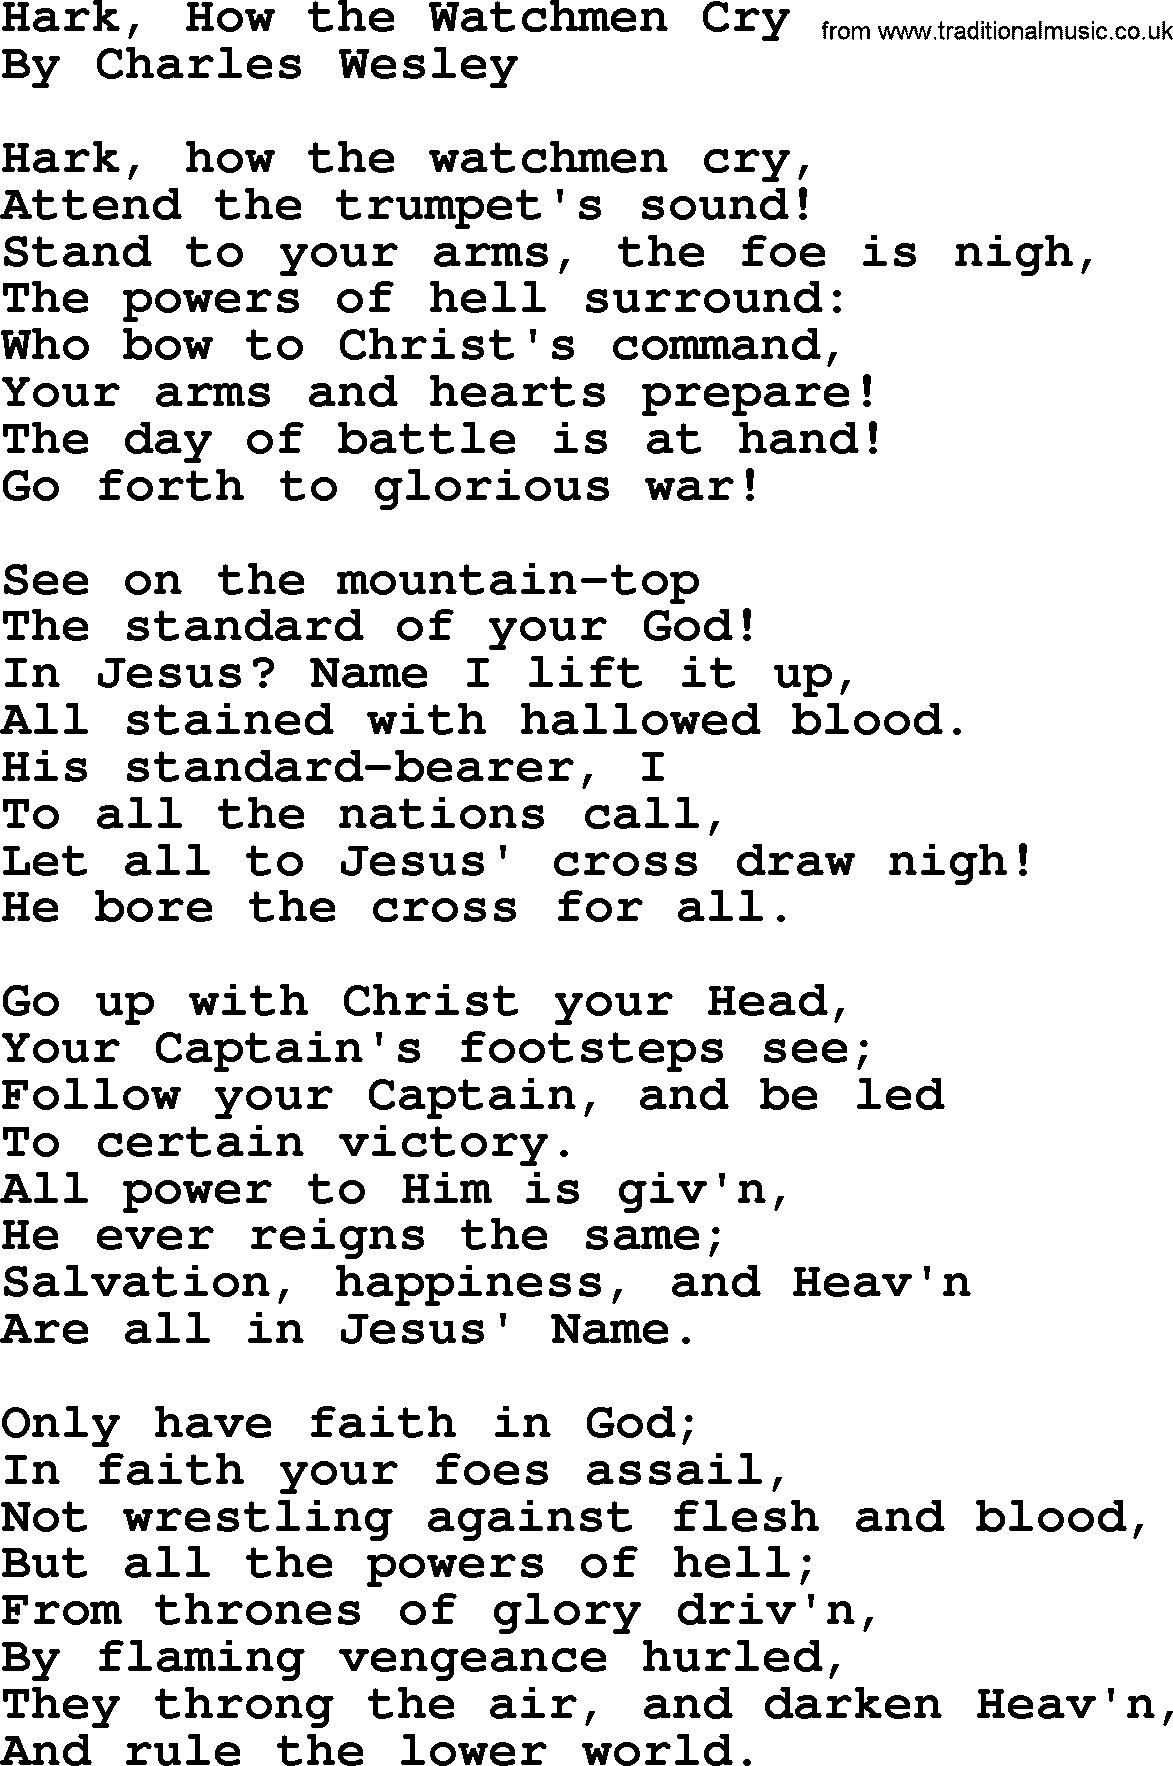 Charles Wesley hymn: Hark, How The Watchmen Cry, lyrics